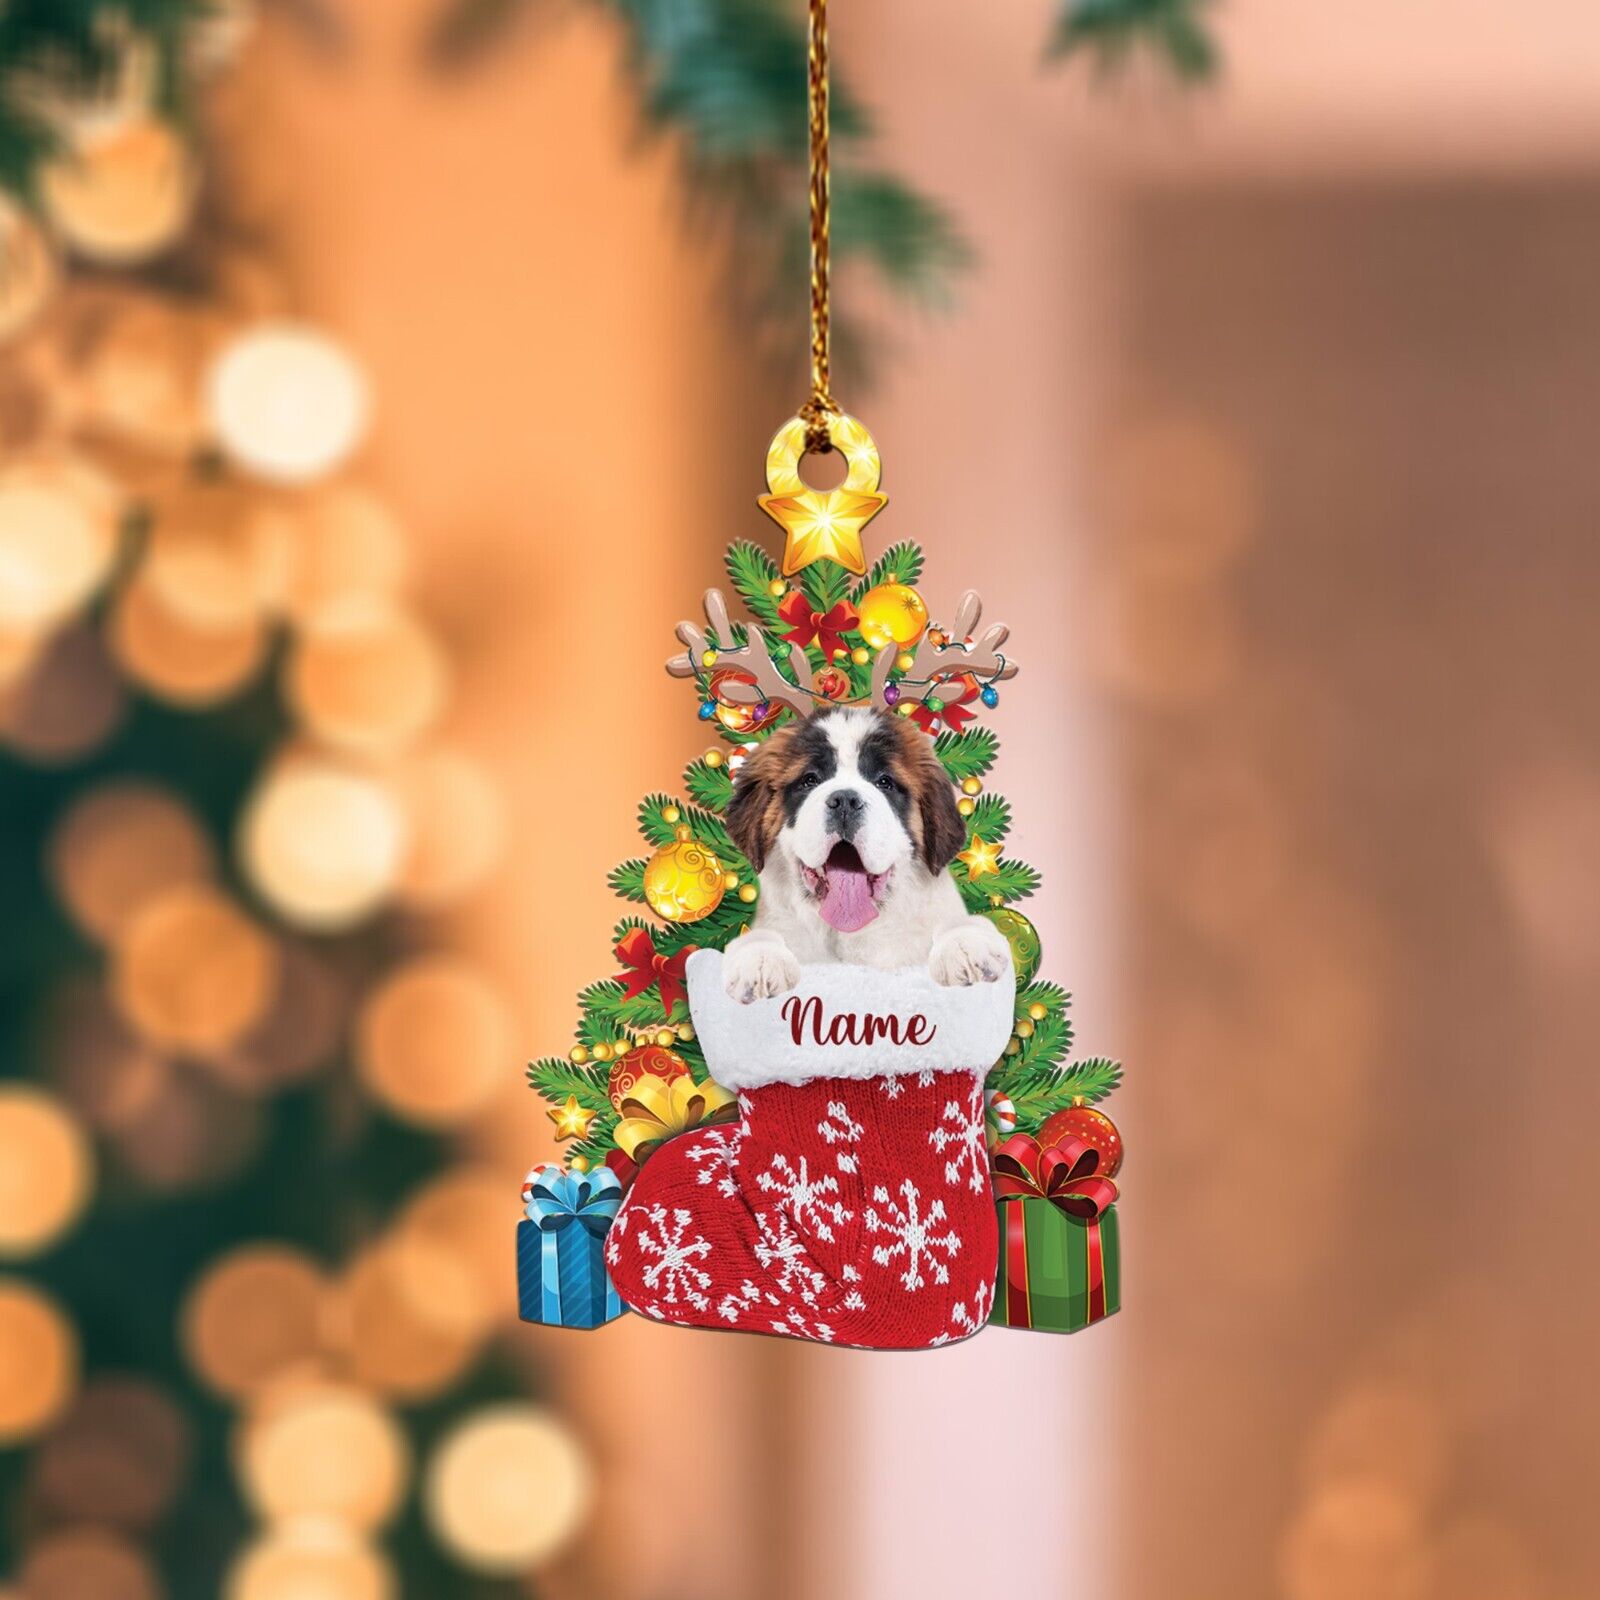 Saint bernard dog Christmas Ornament Dog inside the Christmas Sock Ornament